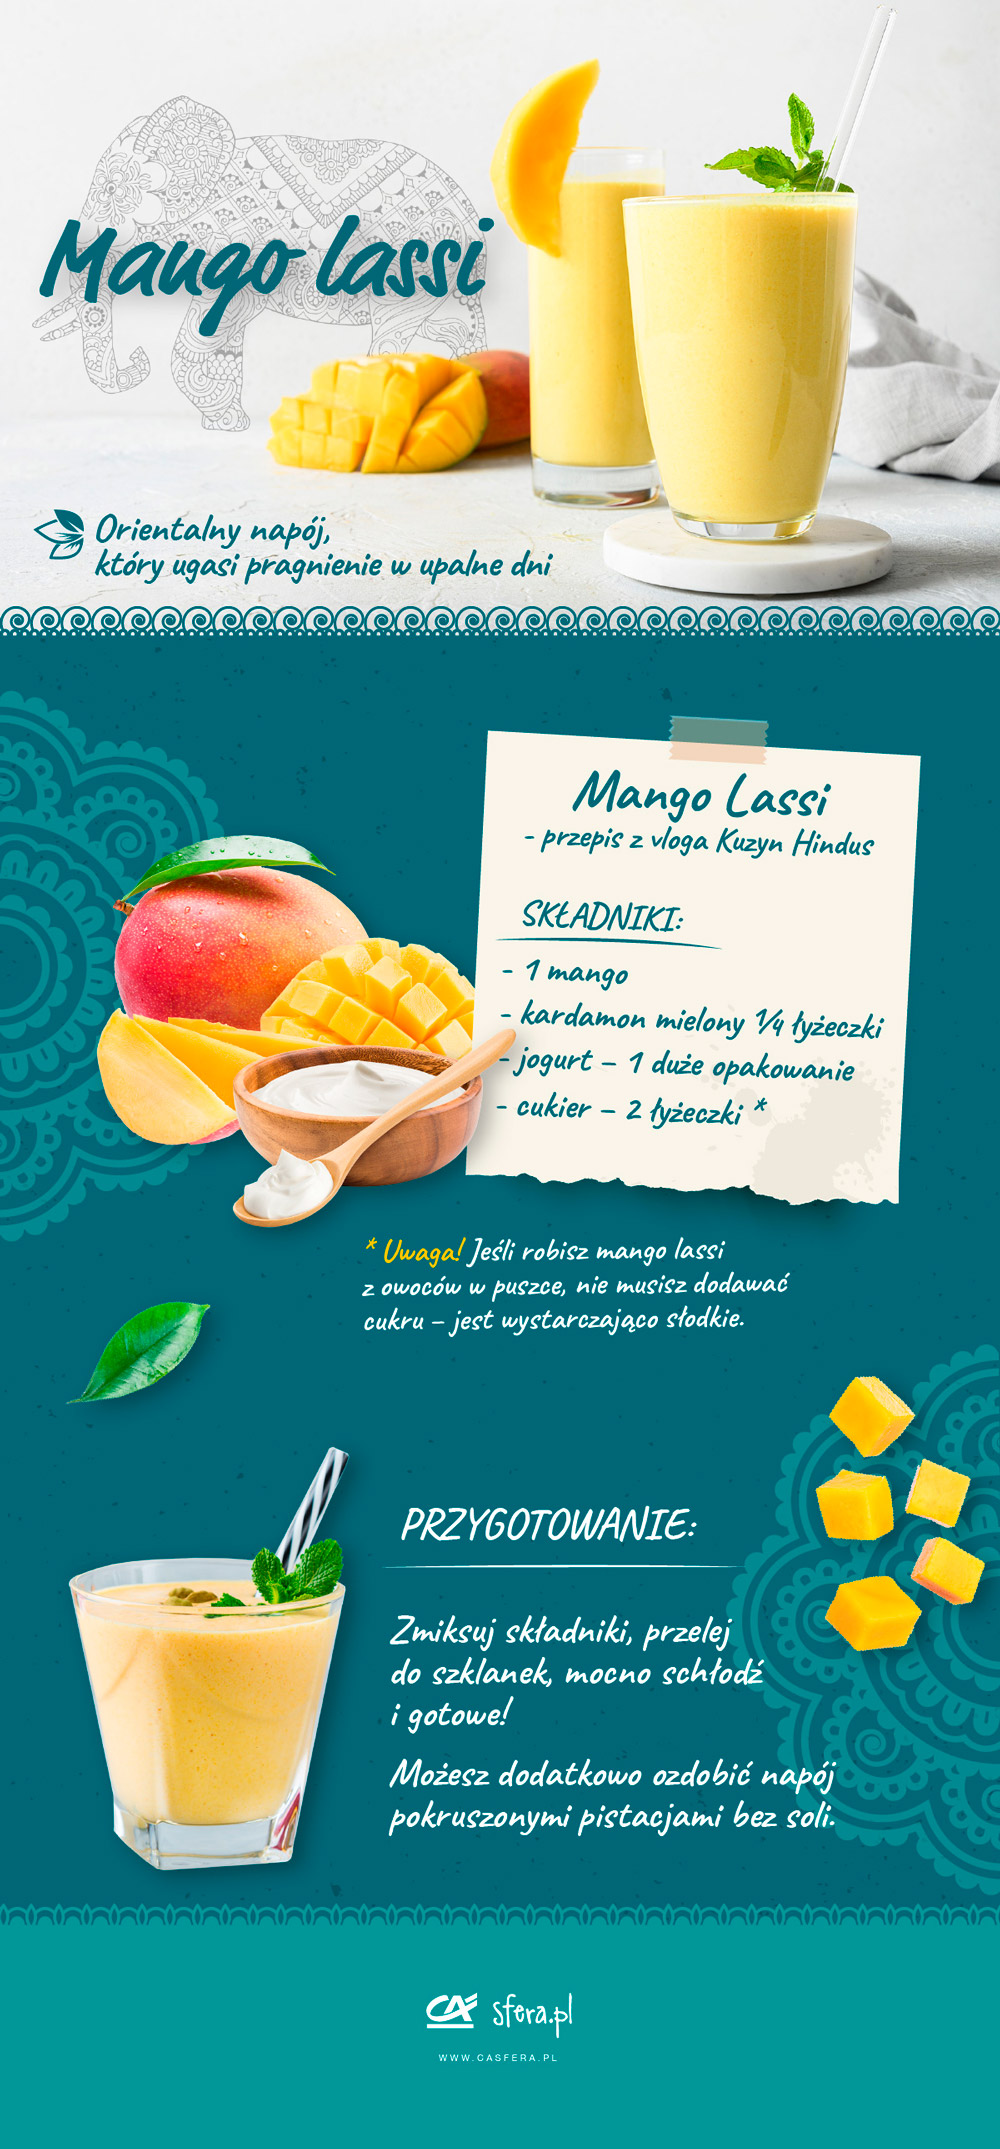 Infografika Mango lassi, przepis z vloga Kuzyn Hindus, Fruit